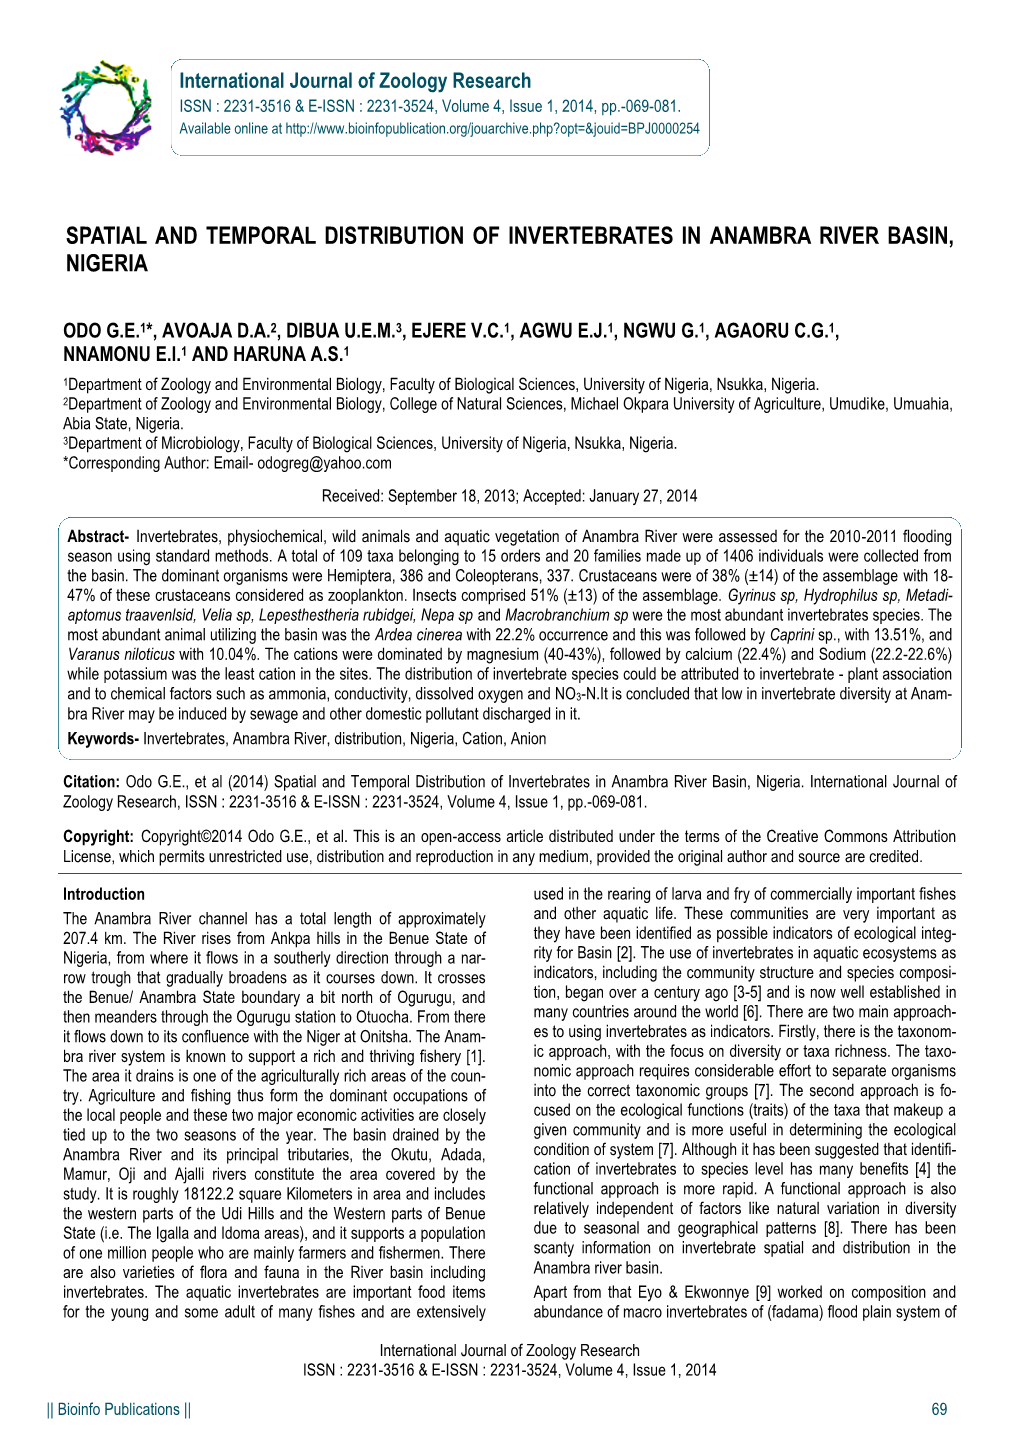 Spatial and Temporal Distribution of Invertebrates in Anambra River Basin, Nigeria